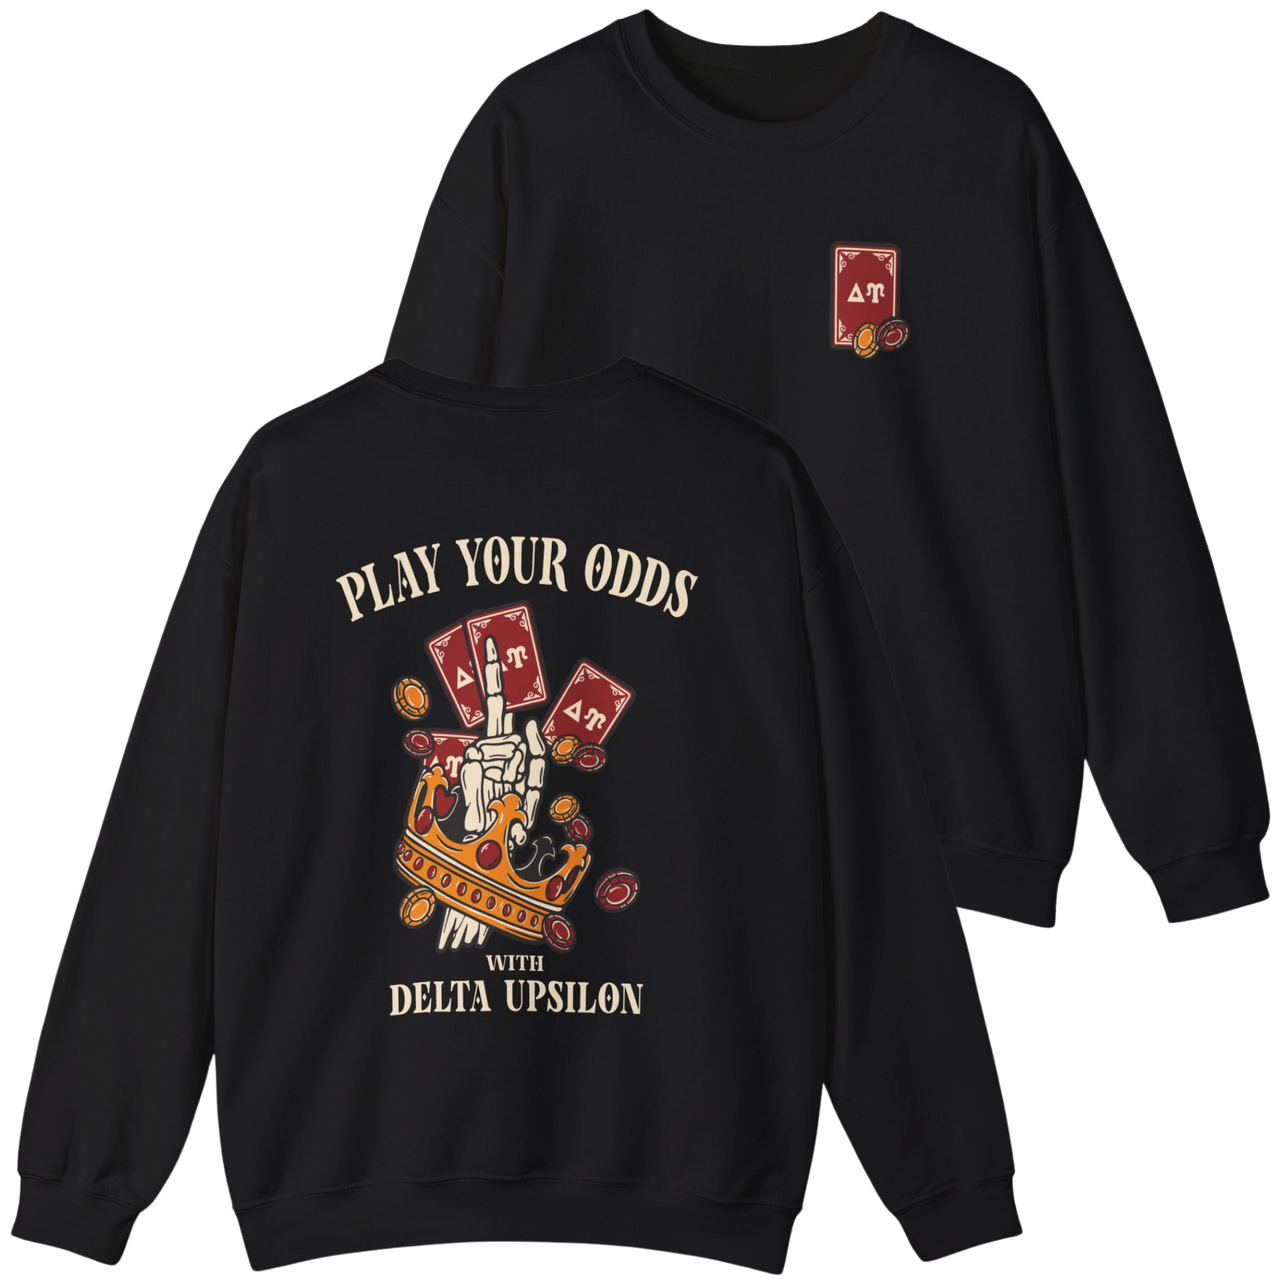 Delta Upsilon Graphic Crewneck Sweatshirt | Play Your Odds